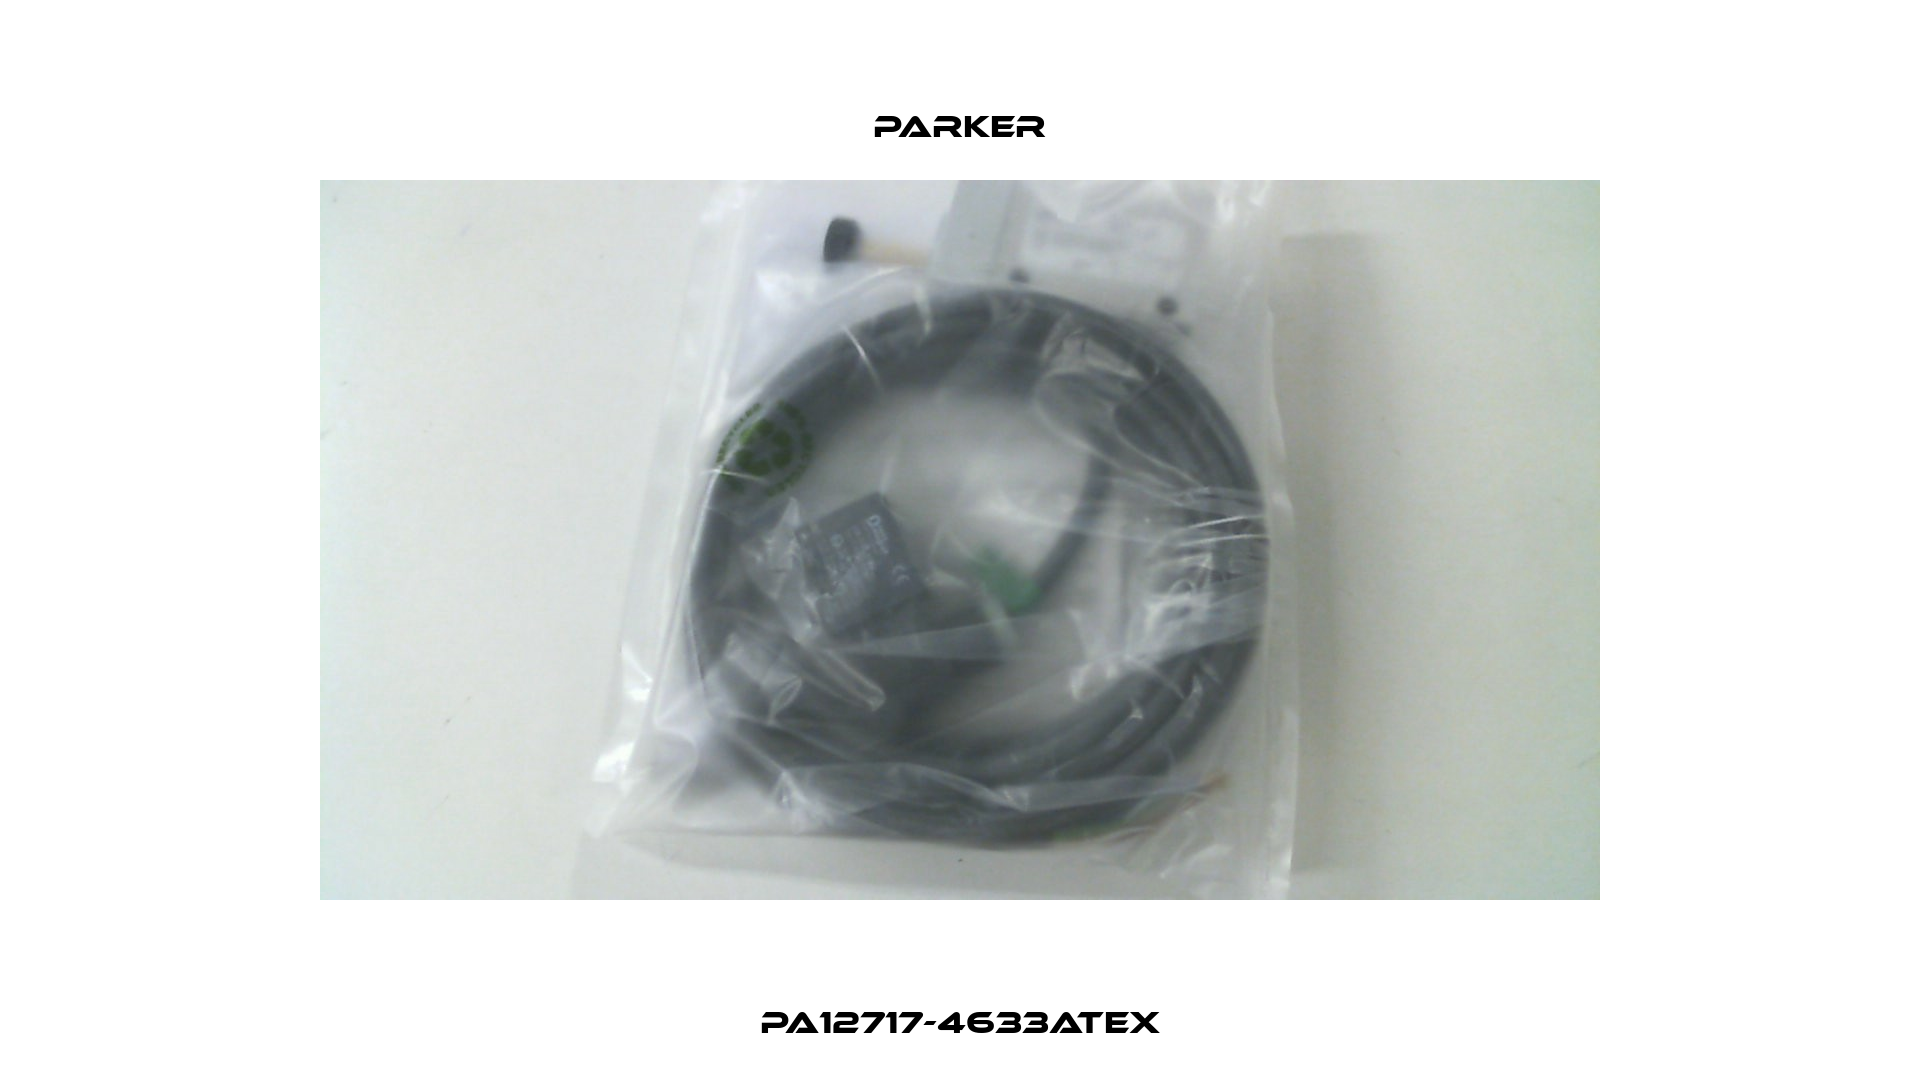 PA12717-4633ATEX Parker